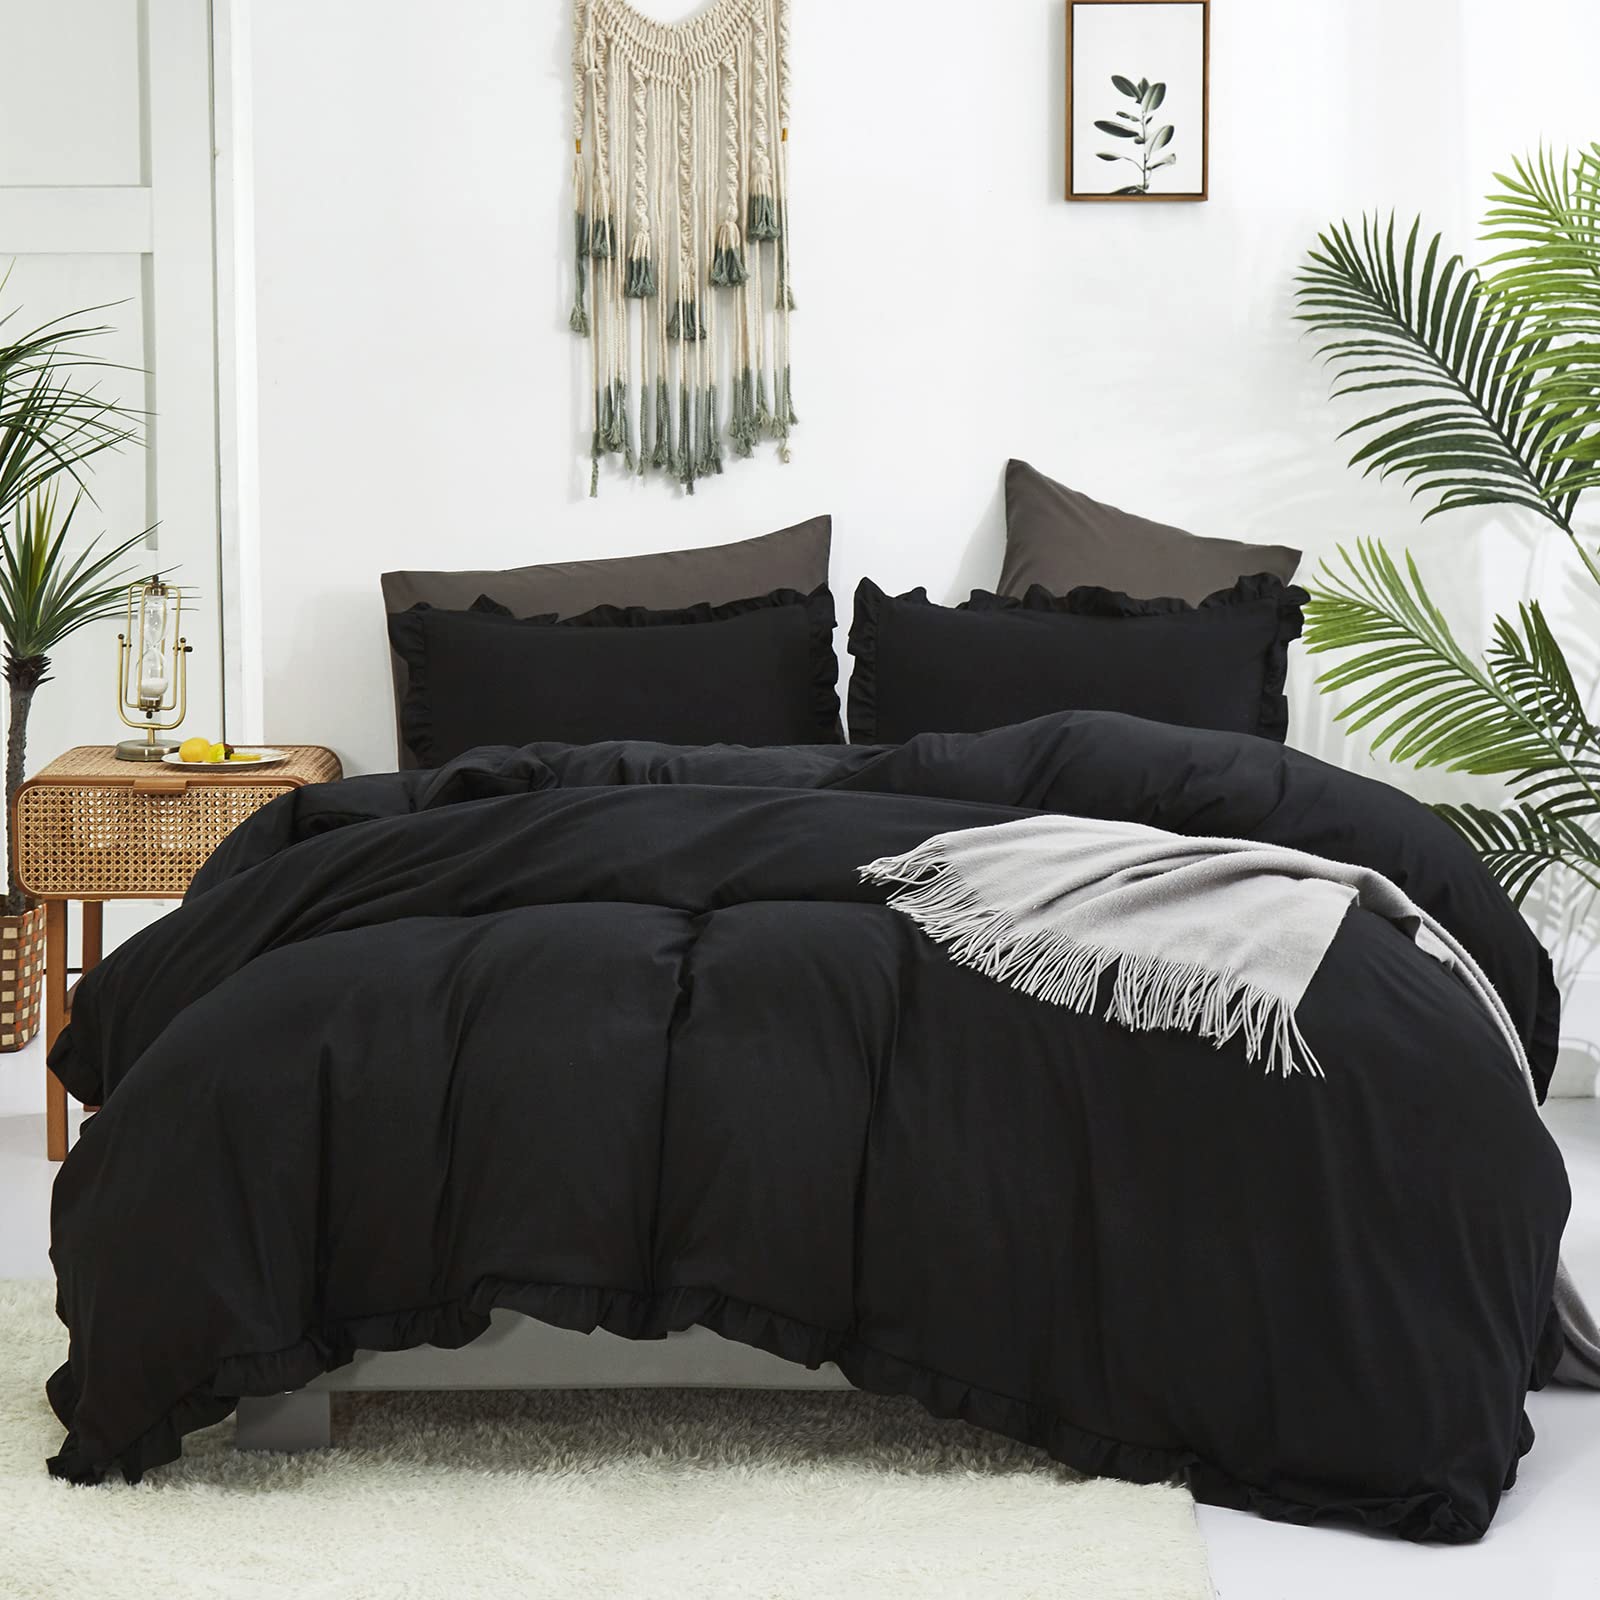 Cottonight Black Comforter Set King Ruffle Black Bedding Comforter Set Farmhouse Cotton Dark Color Blanket Quilts Shabby Rustic 